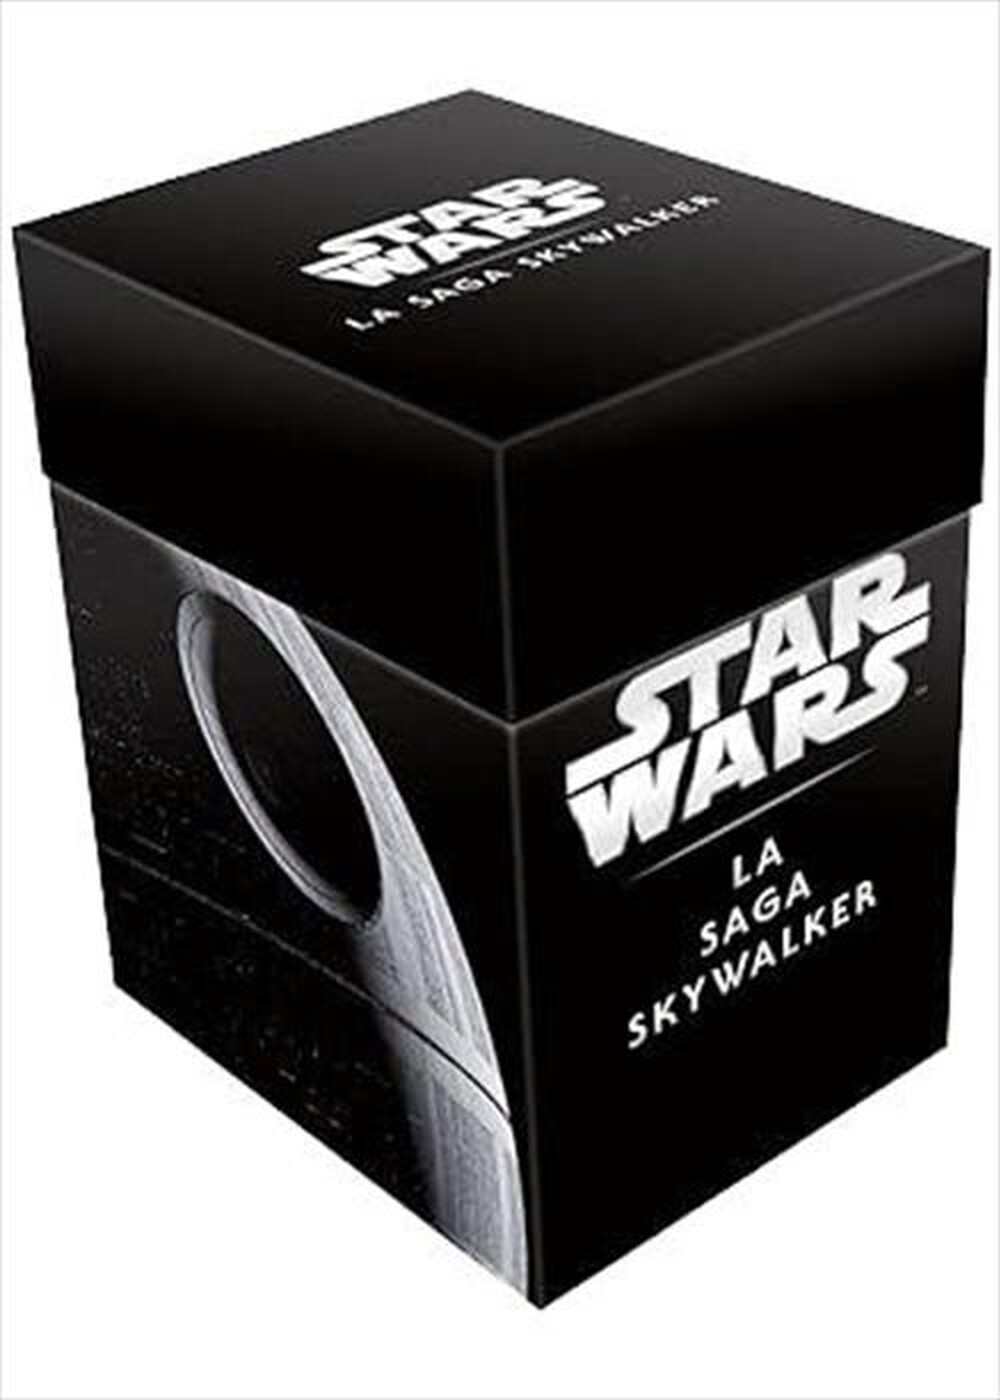 "WALT DISNEY - Star Wars - La Saga Skywalker (9 Dvd)"